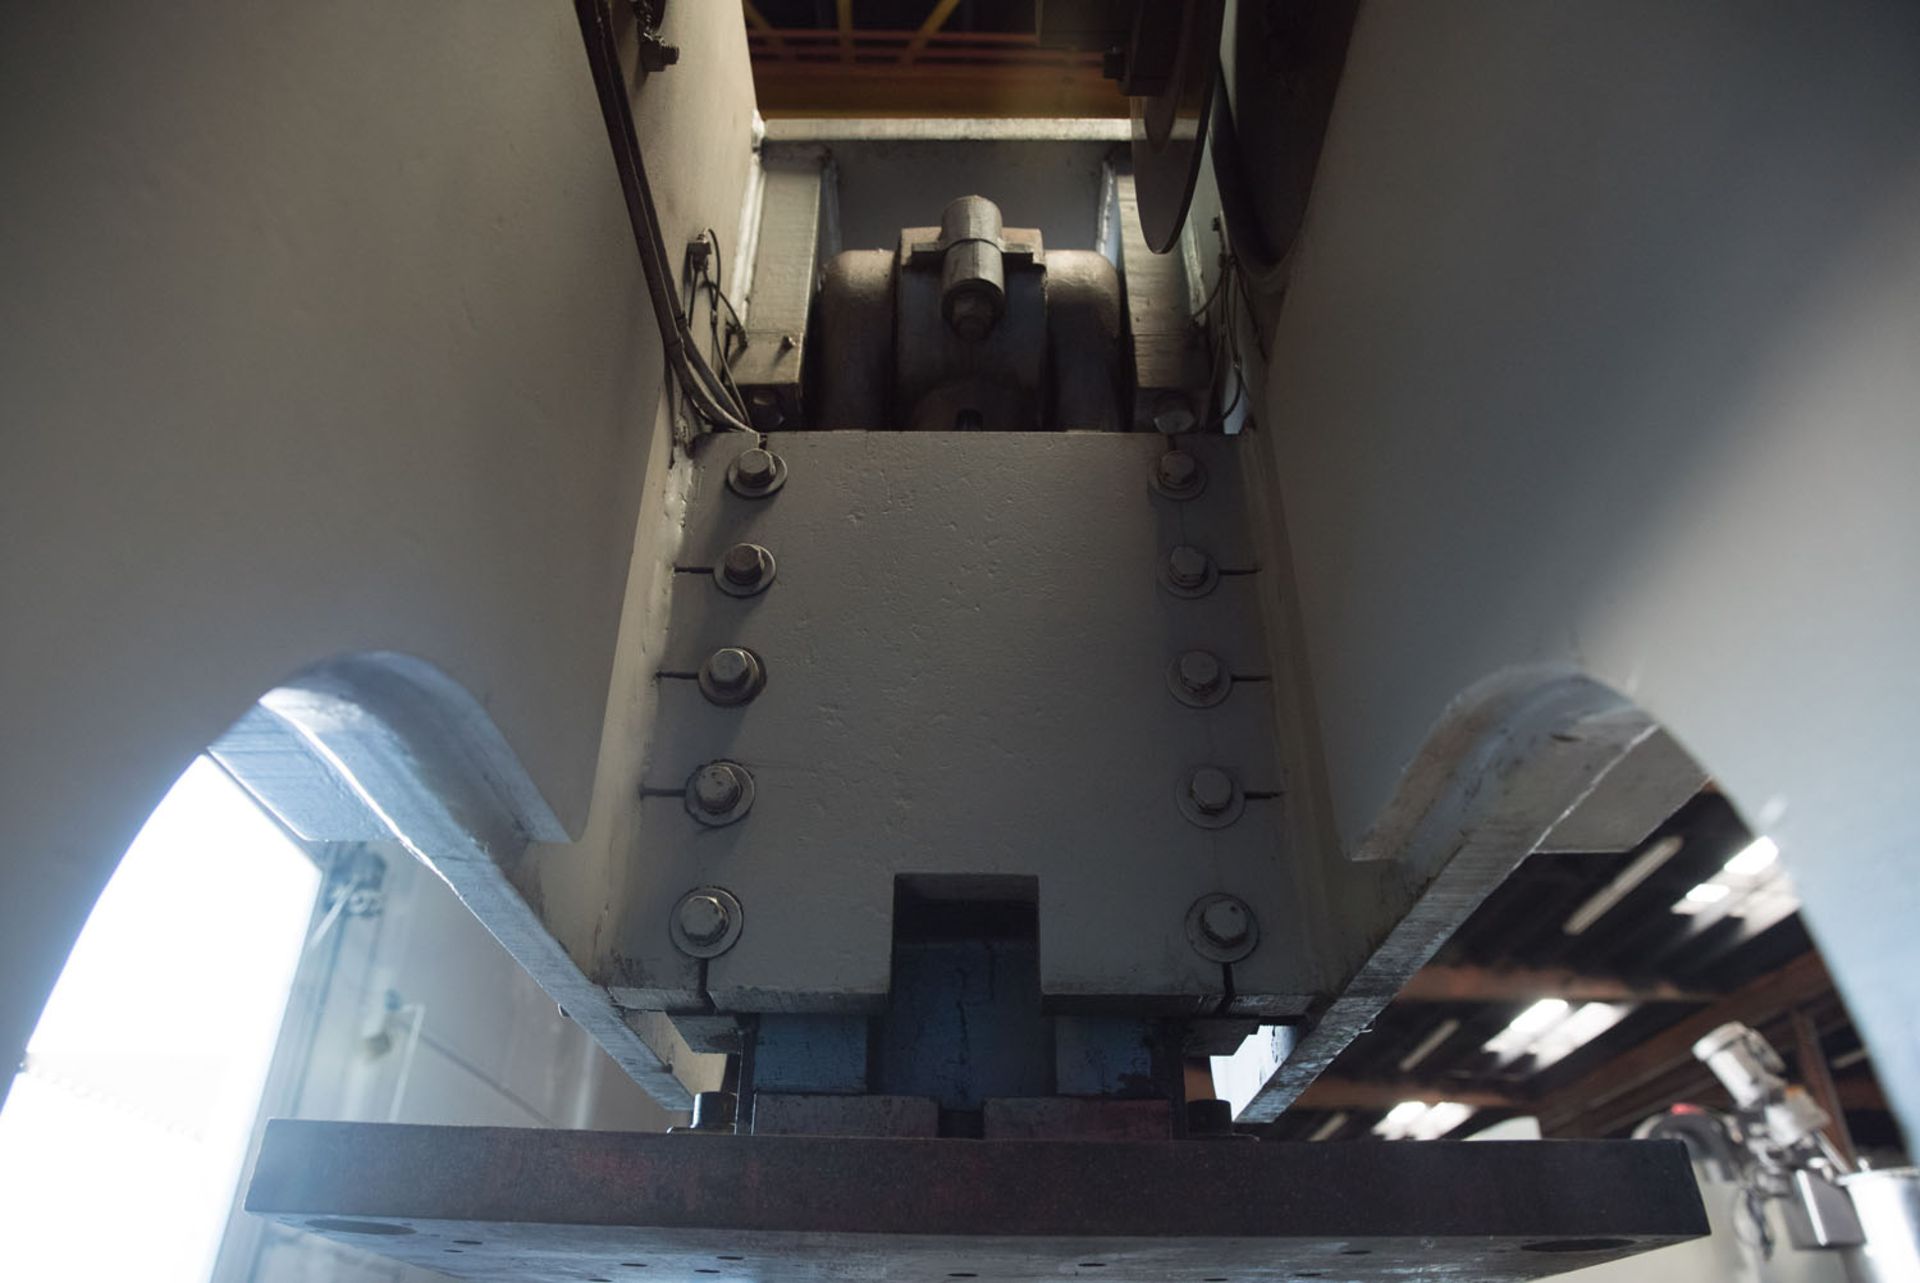 120-Ton x 40" x 30" Heim 12GTX Gap Frame Punch Press 6" Stroke - Located In: Huntington Park, CA - Image 20 of 20